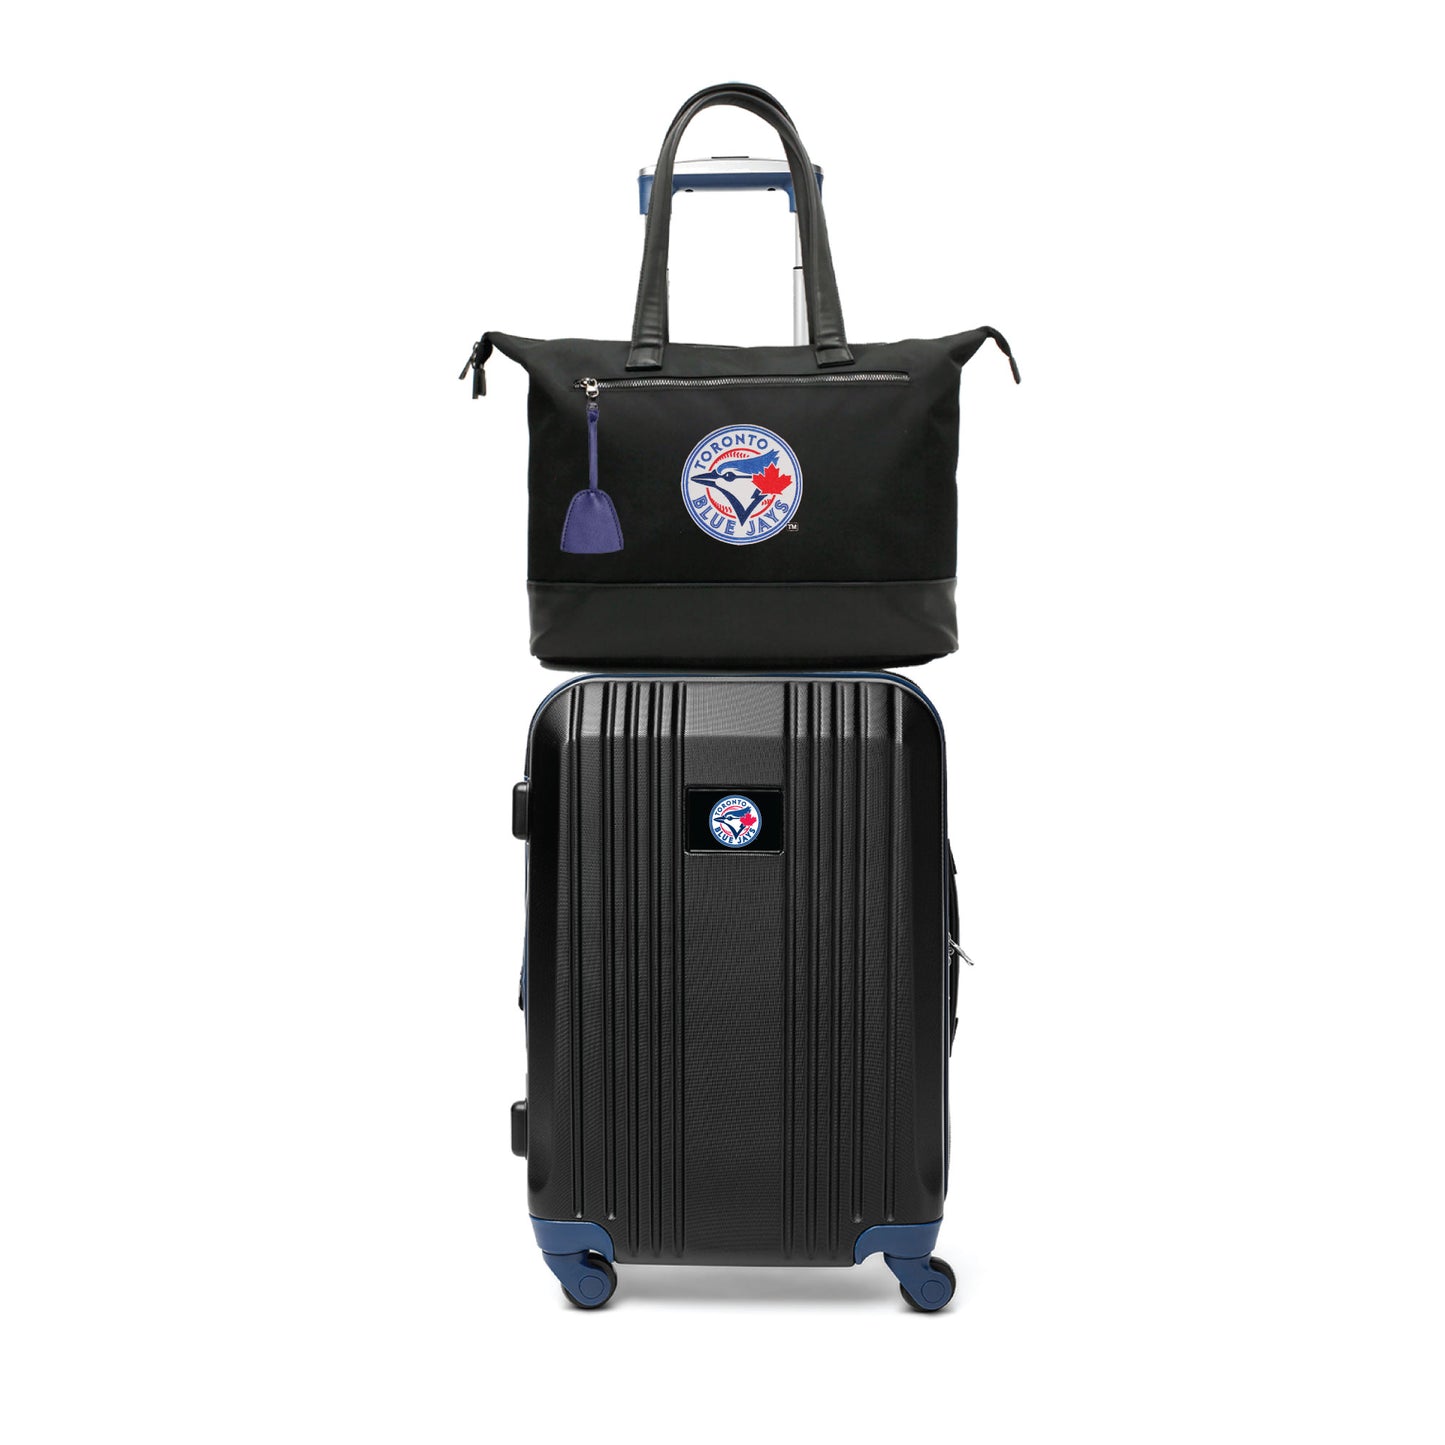 Toronto Blue Jays Premium Laptop Tote Bag and Luggage Set